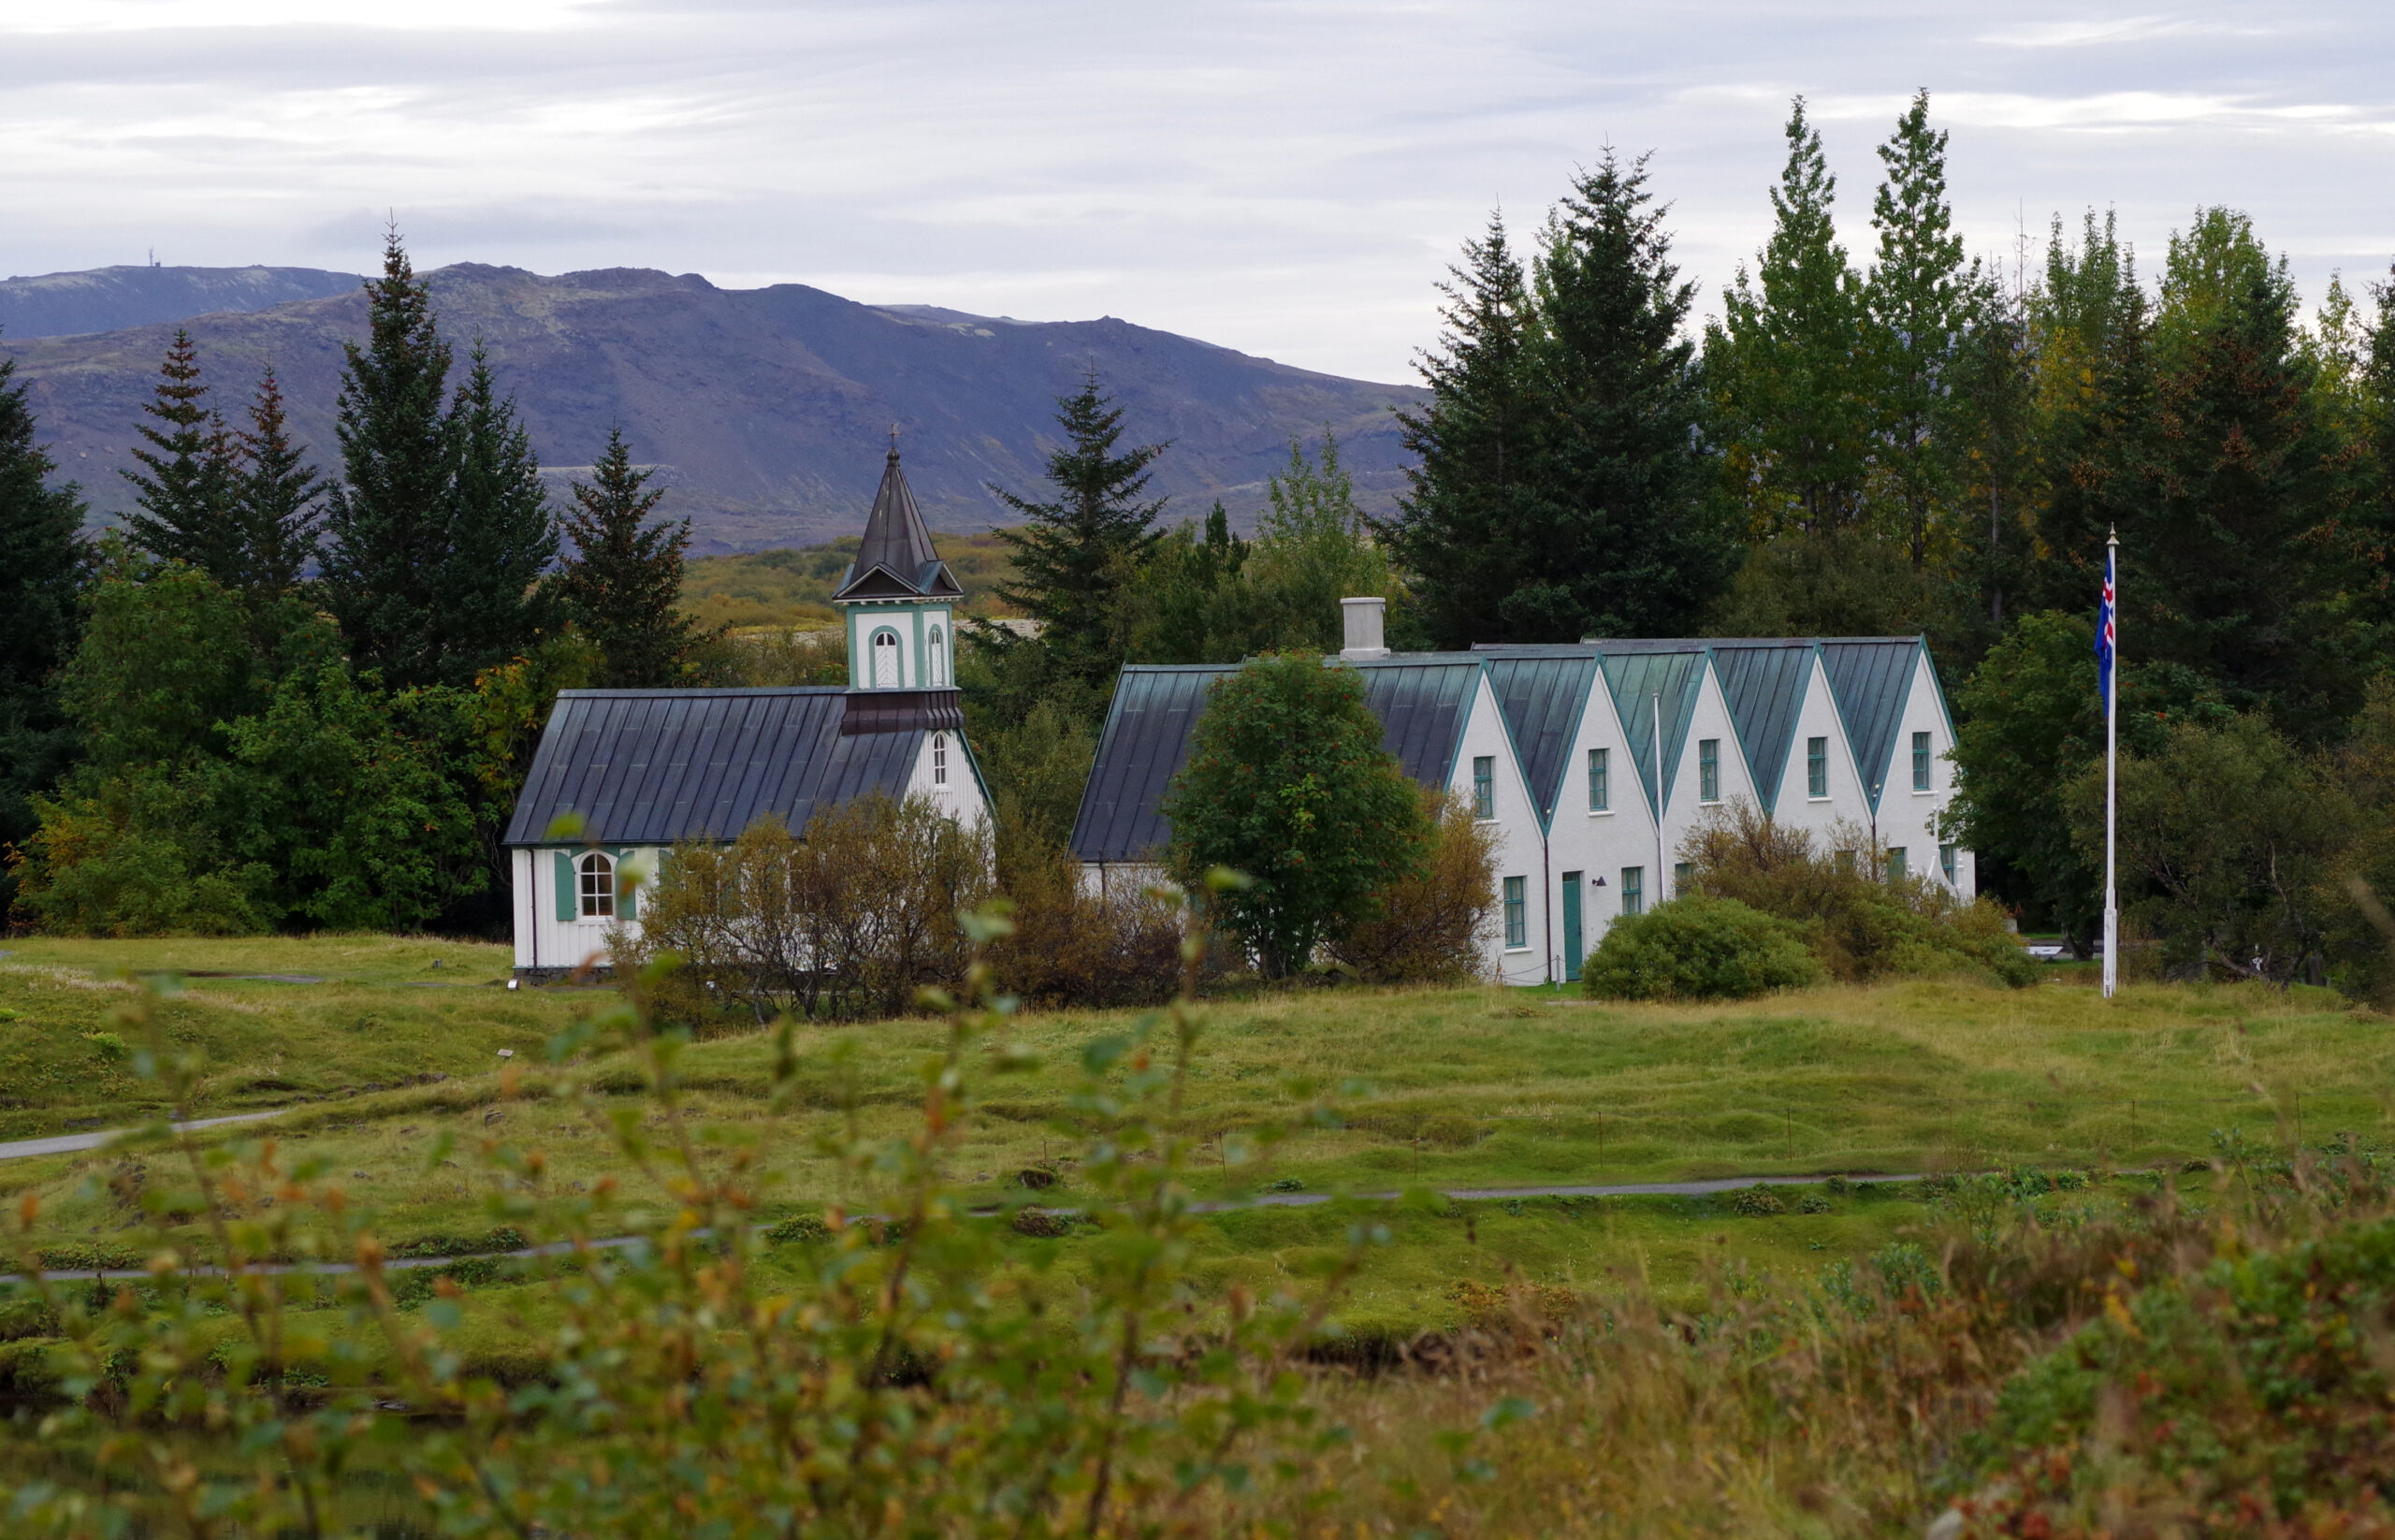 Death of a tourist in Þingvellir National Park